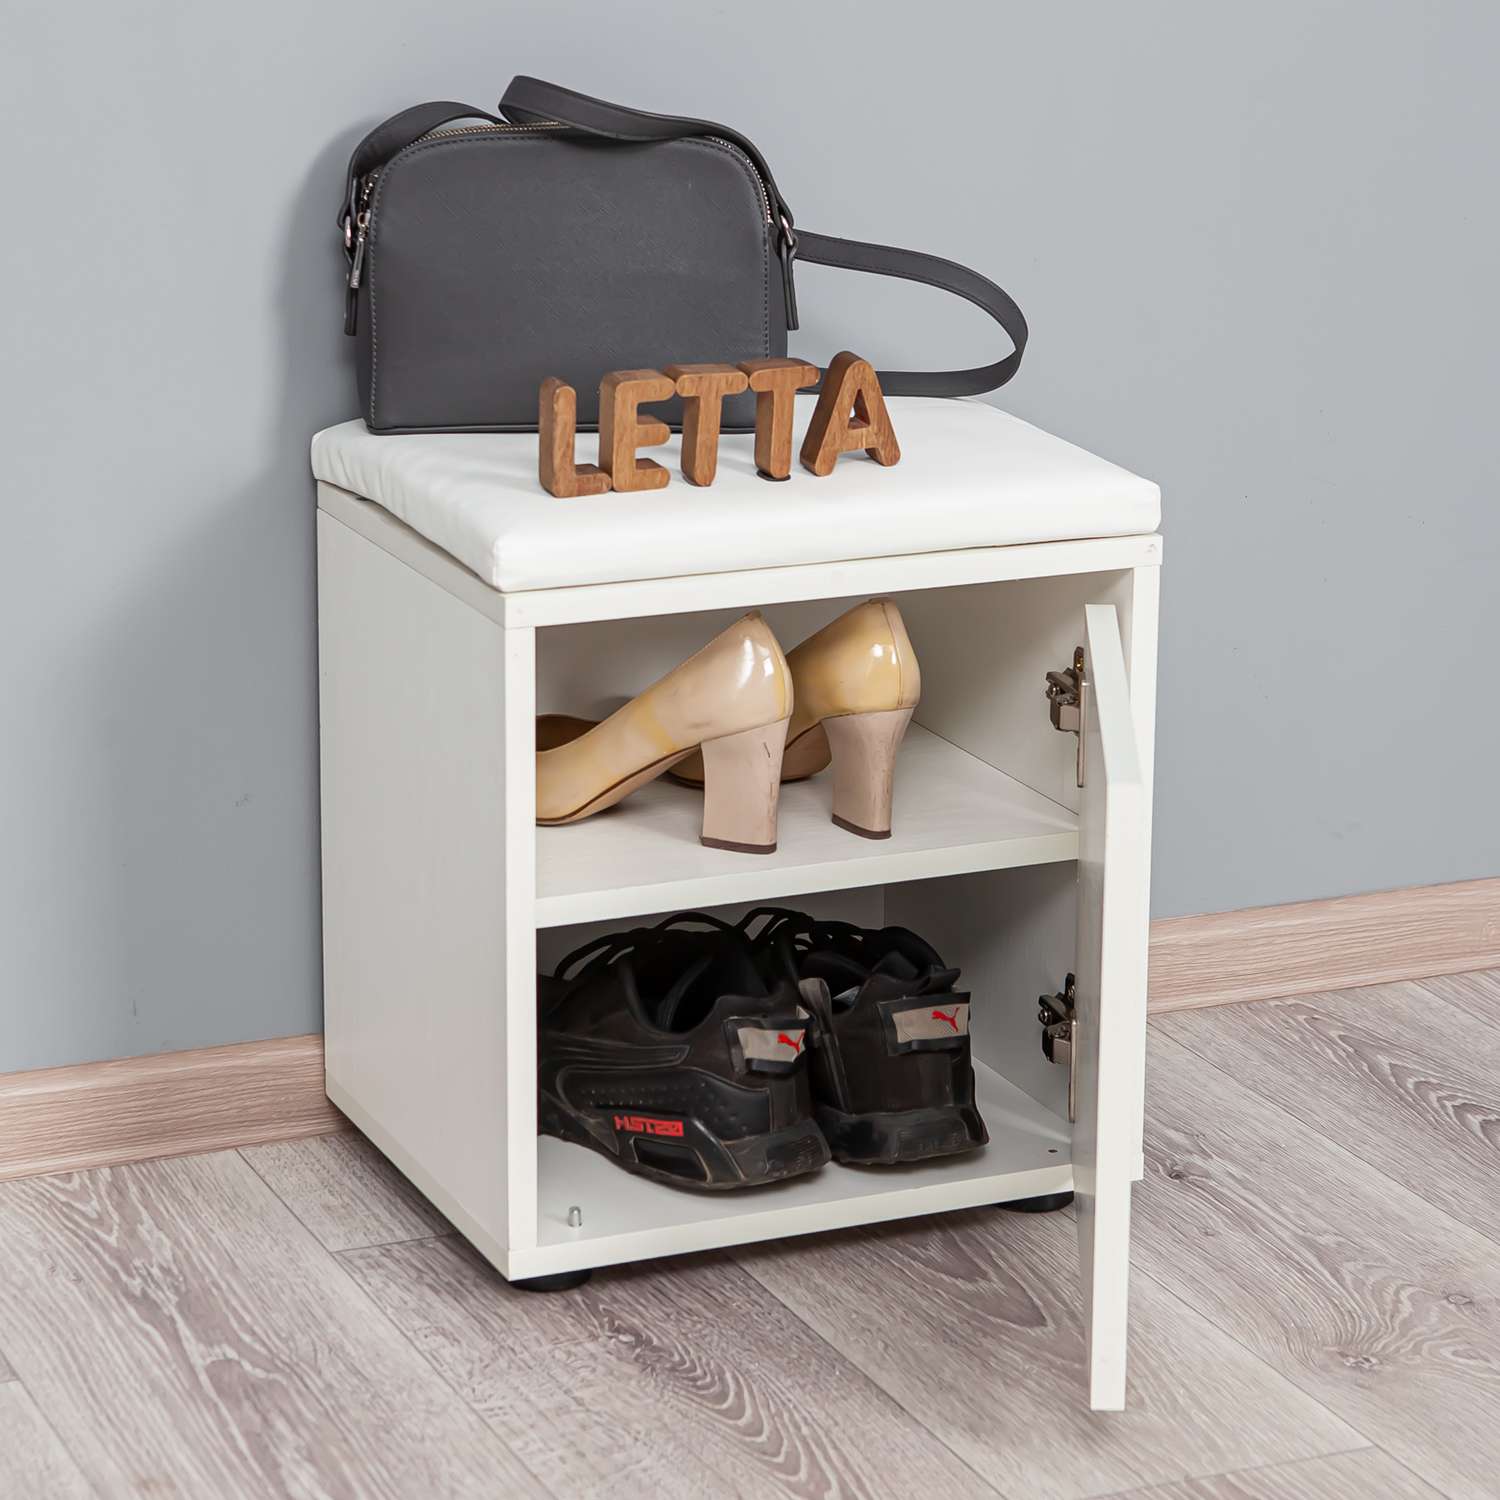 Обувница LETTA Тумба - обувница для обуви Мальта Лайт Цвет белое тиснение 380х425х300 - фото 1